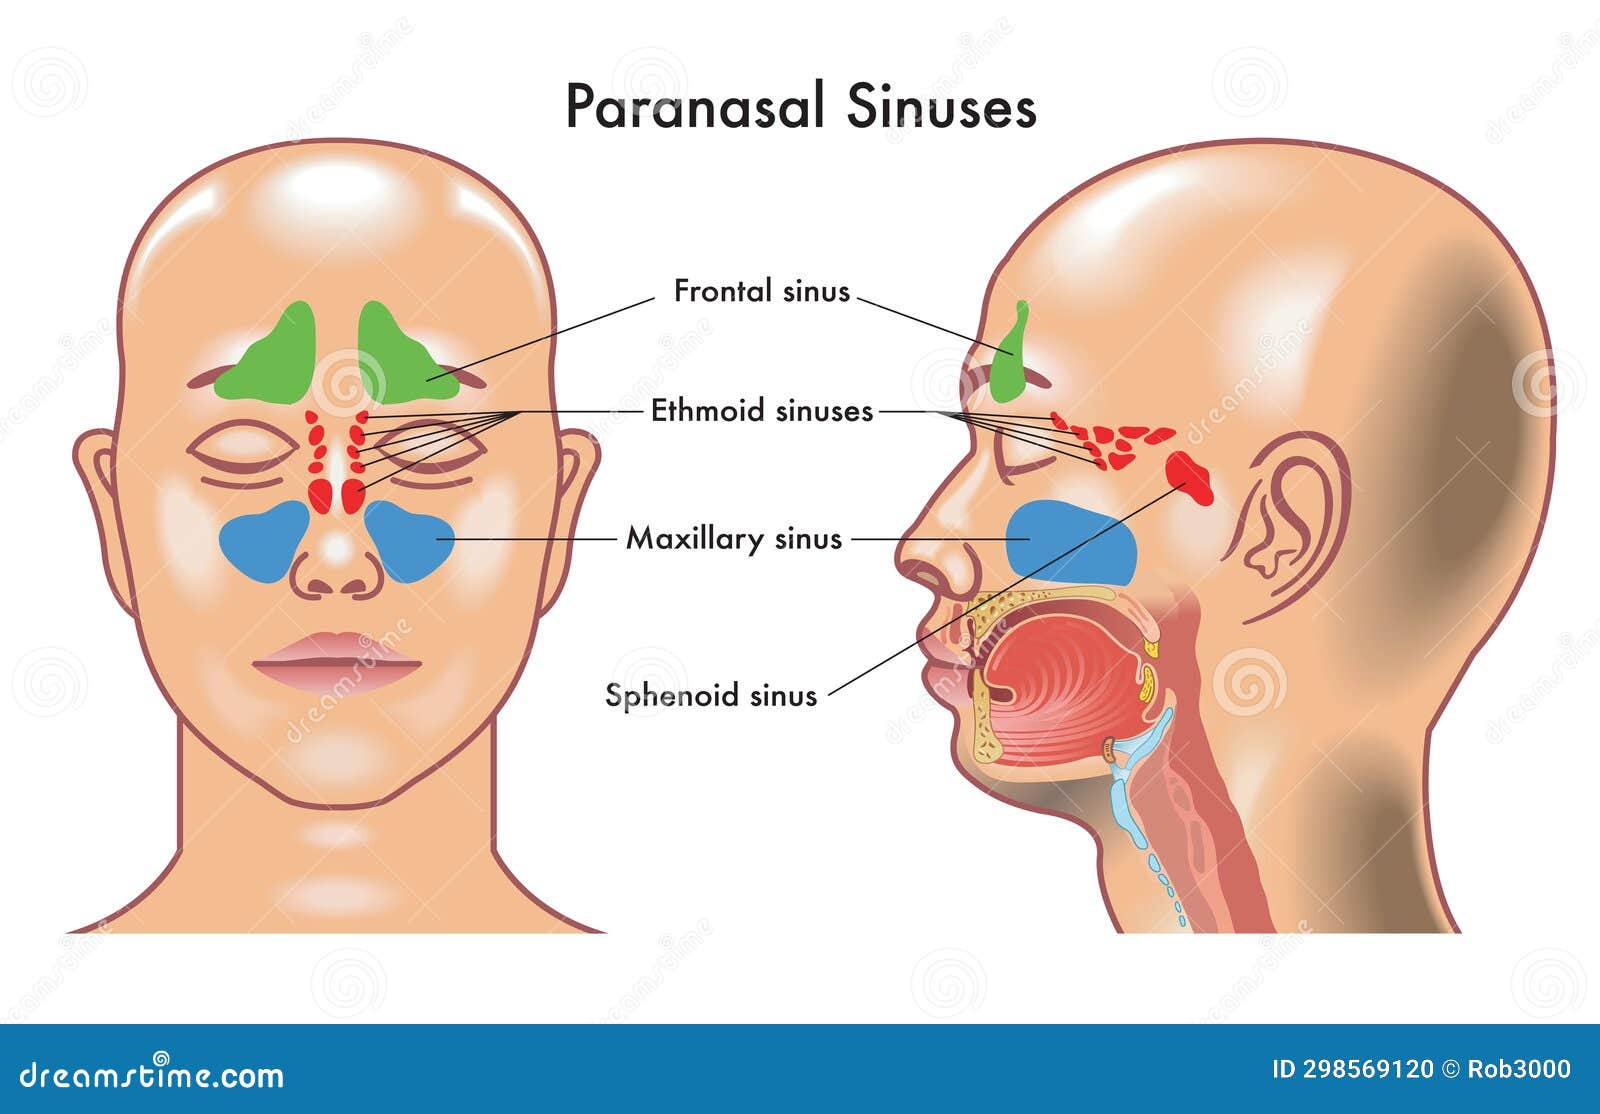 diagram of human paranasal sinuses with annotations